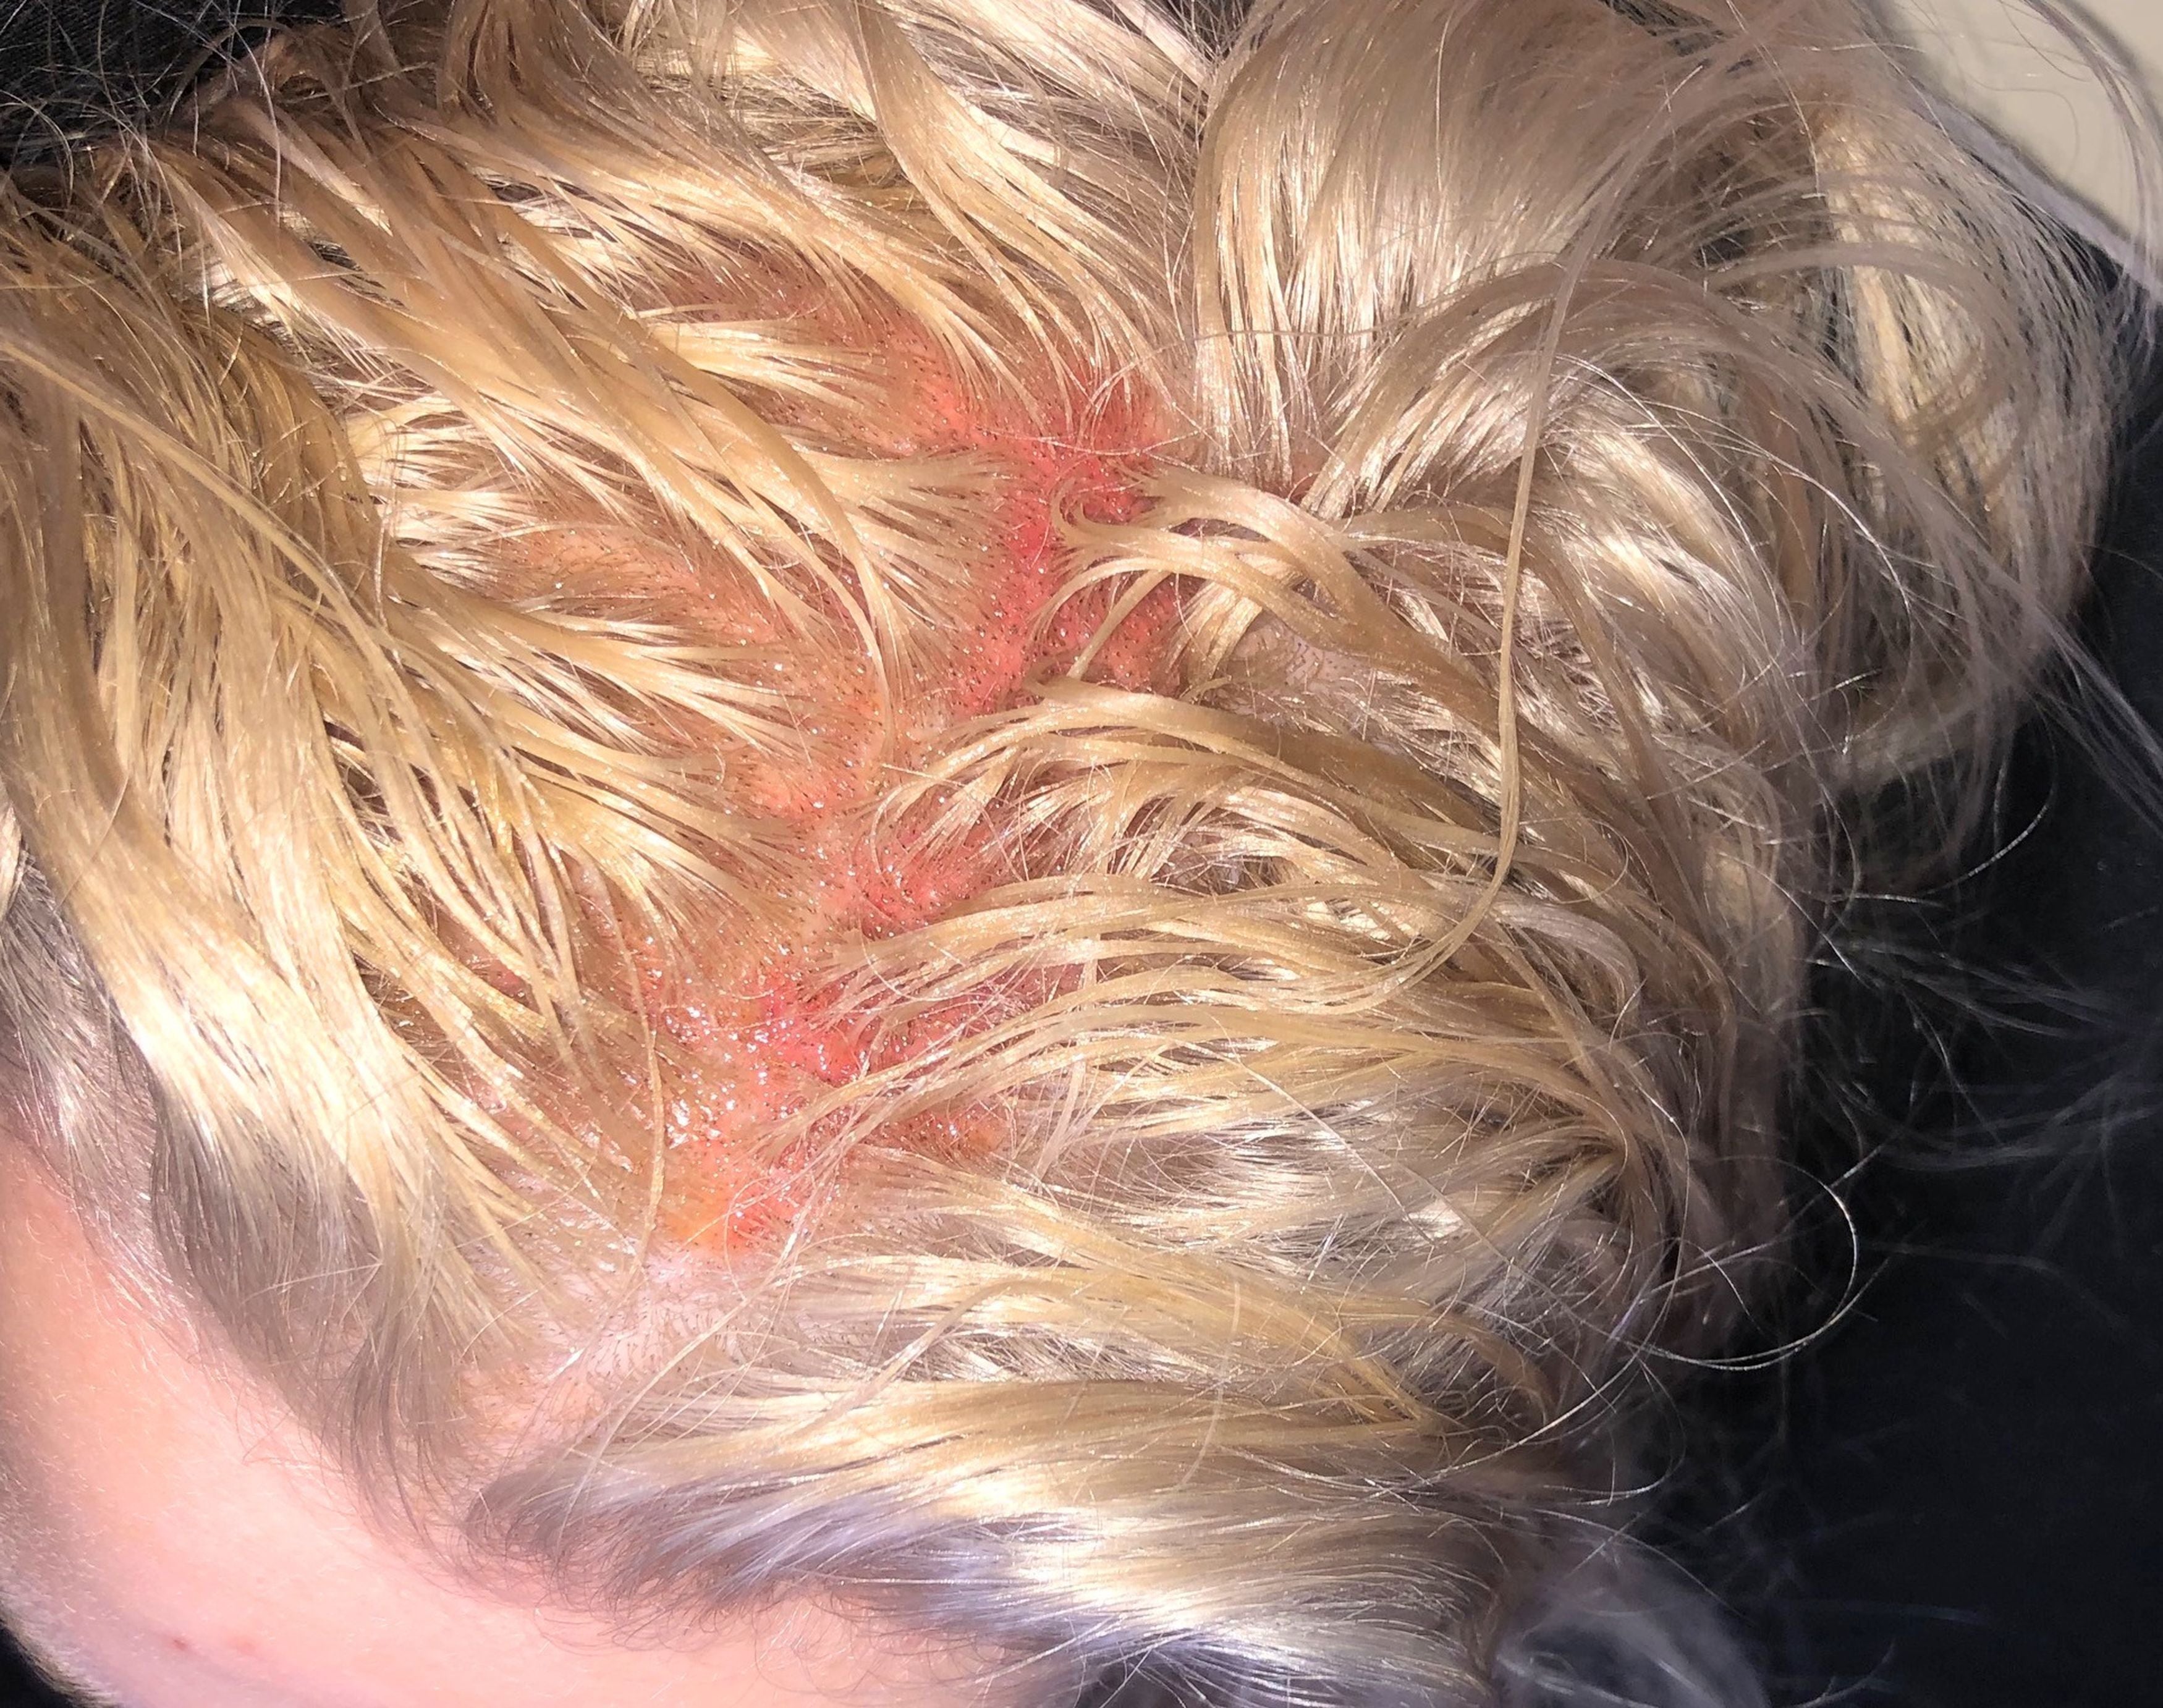 Severe bleach burns on the scalp